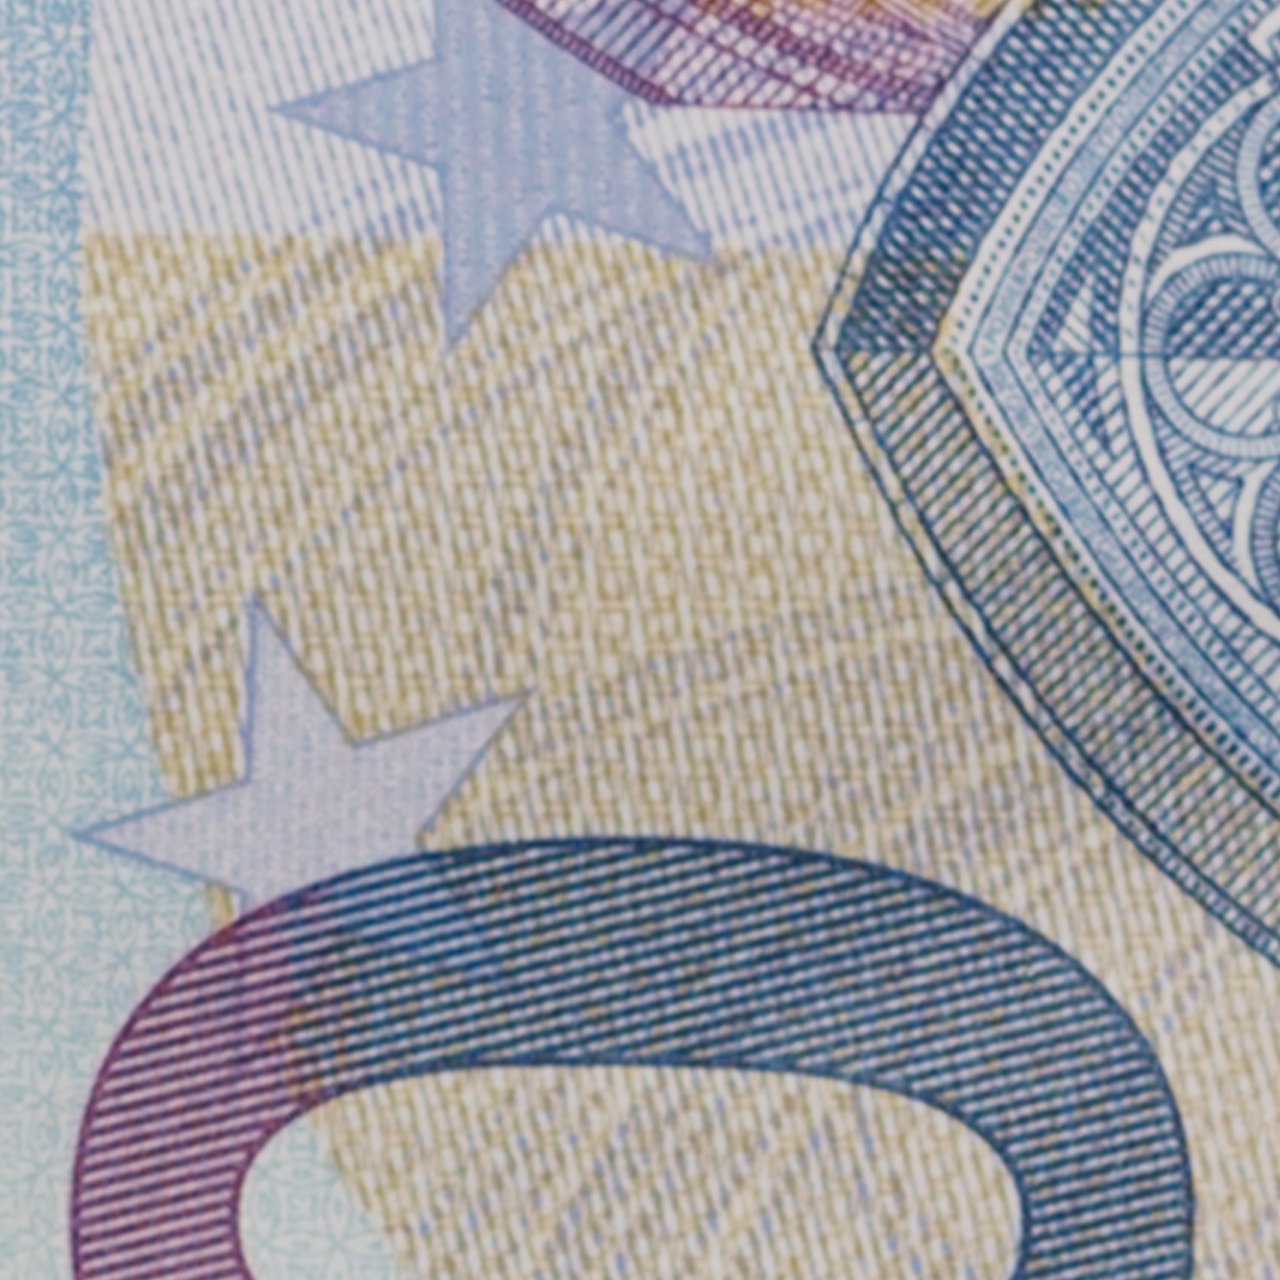 Euro_Banknotes_Detail_closer_BRAW.jpg